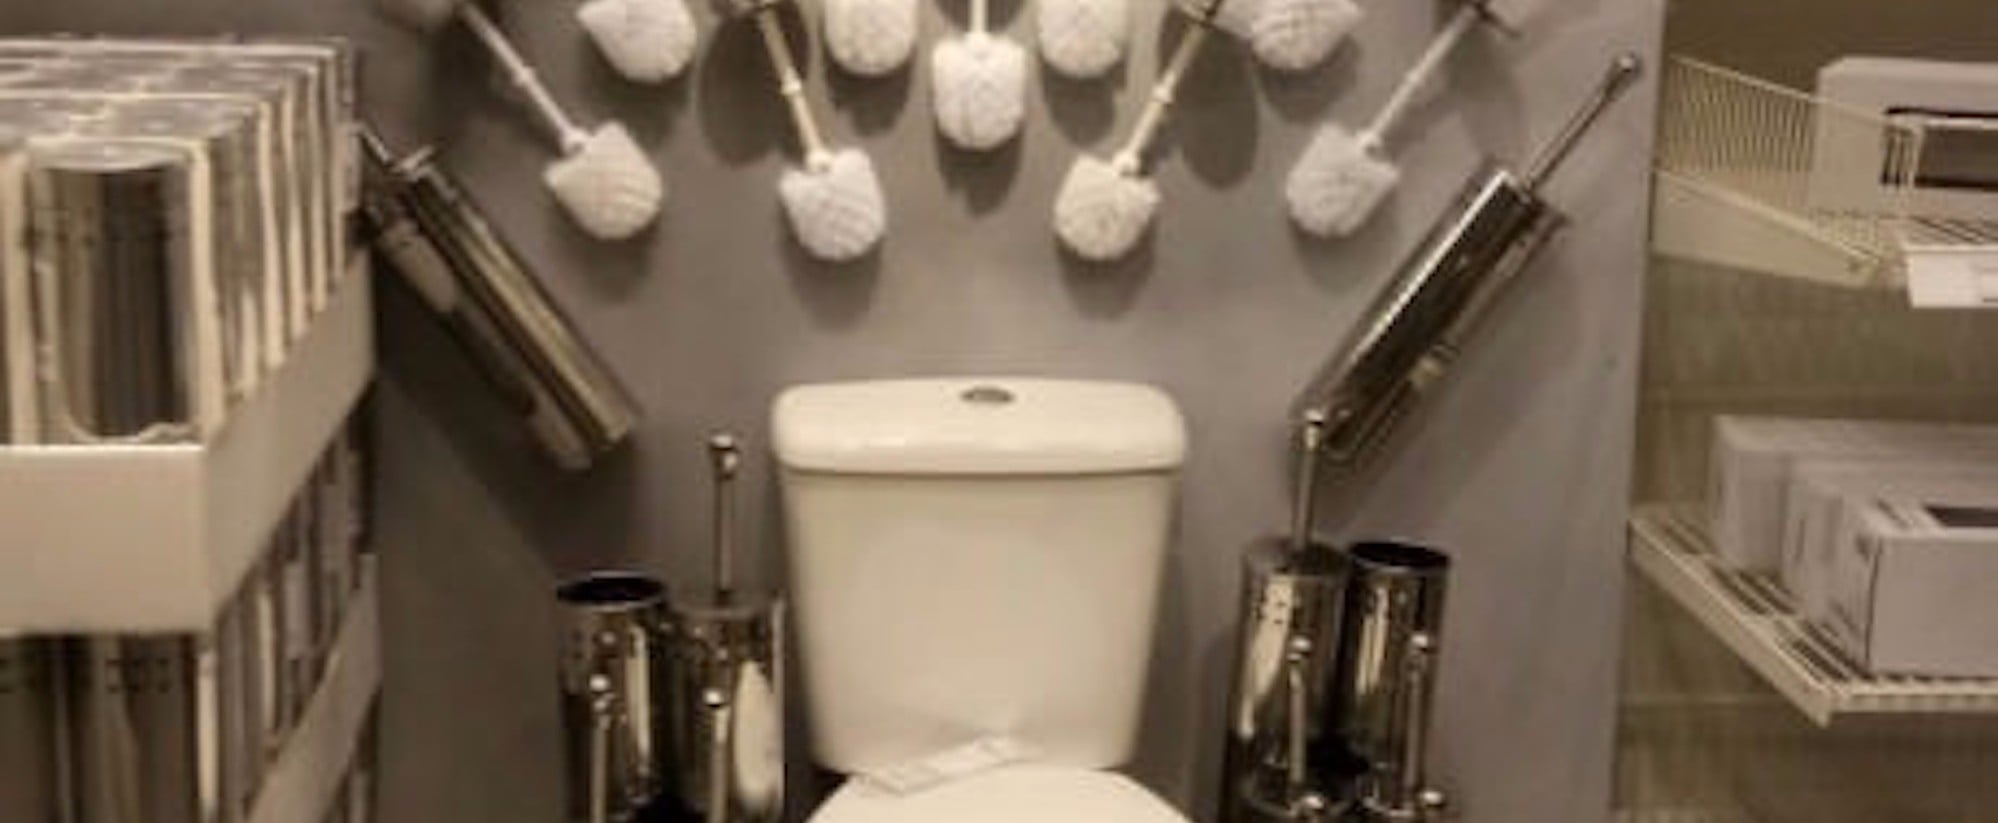 stave Pind klint Game of Thrones Toilet Display at Ikea | POPSUGAR Home